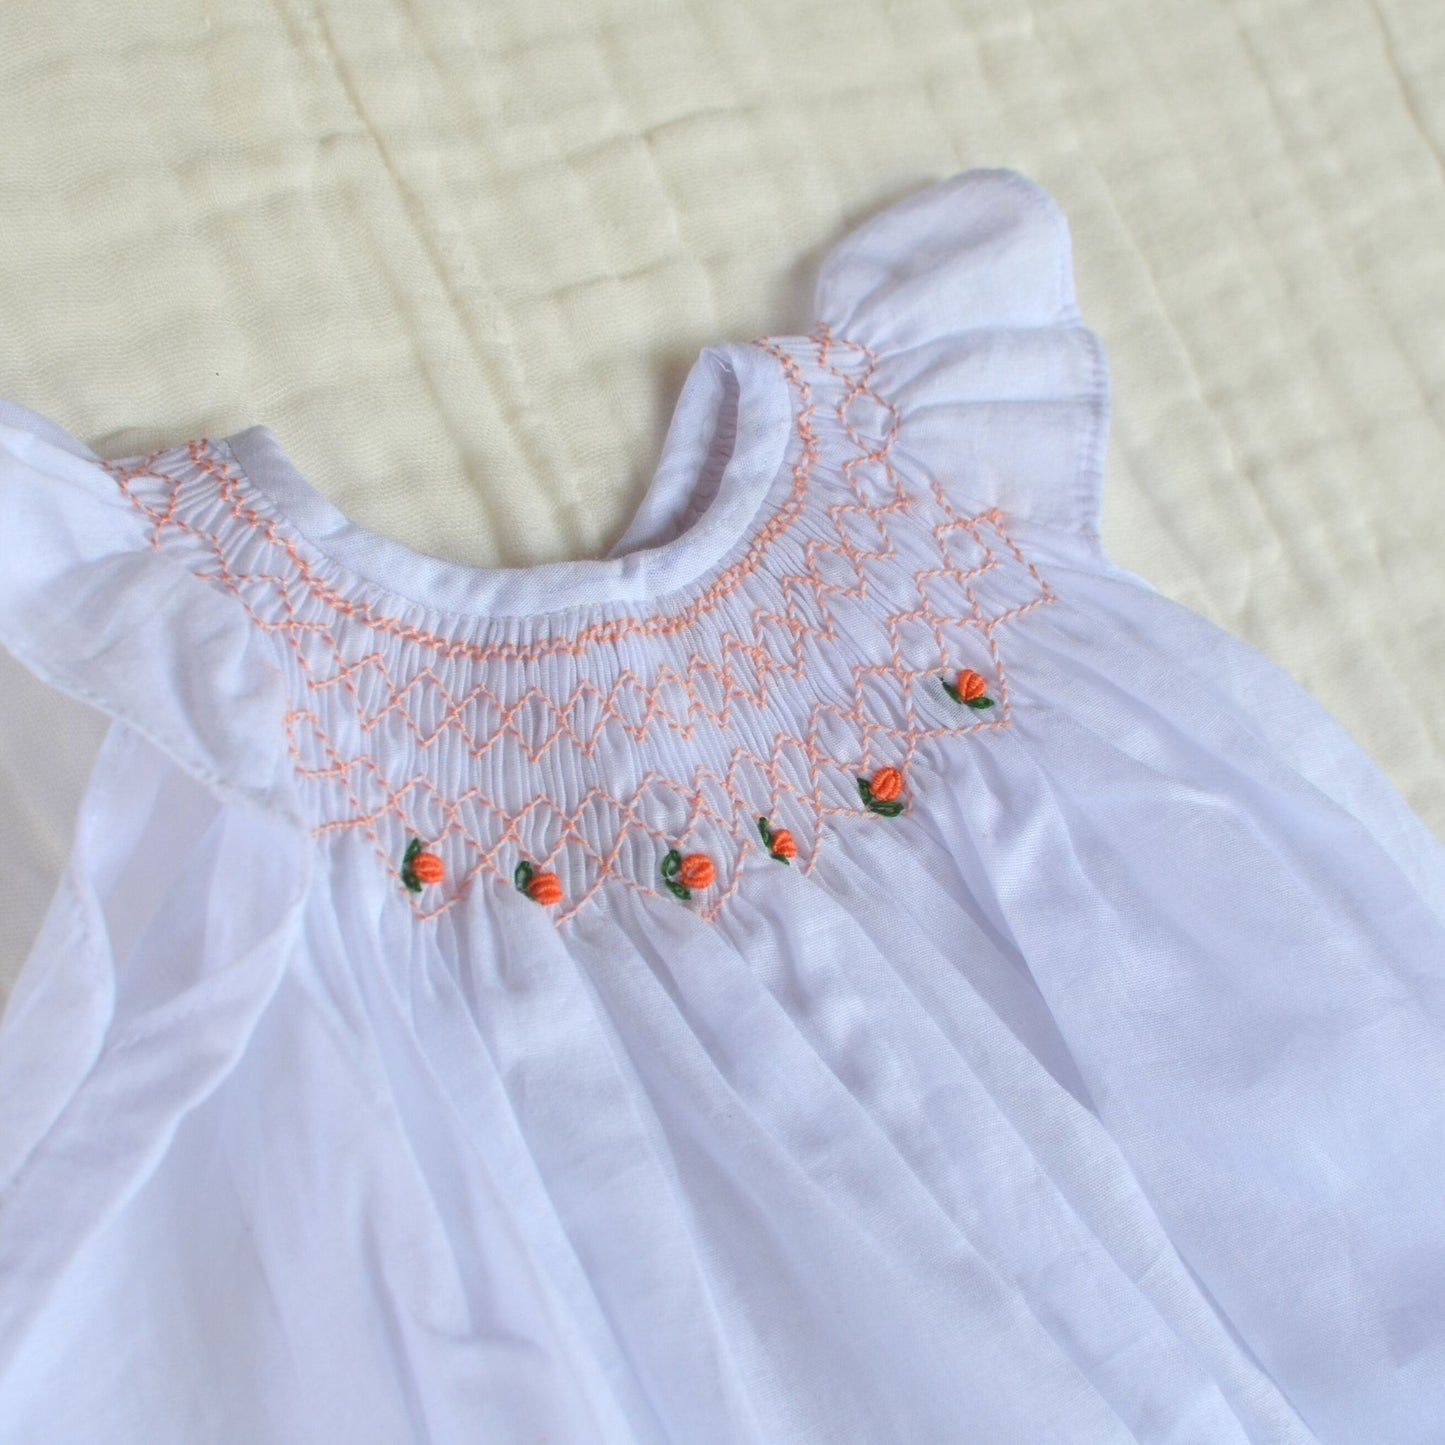 Handmade Smocked Newborn Dress Collection - 3 to 6 months